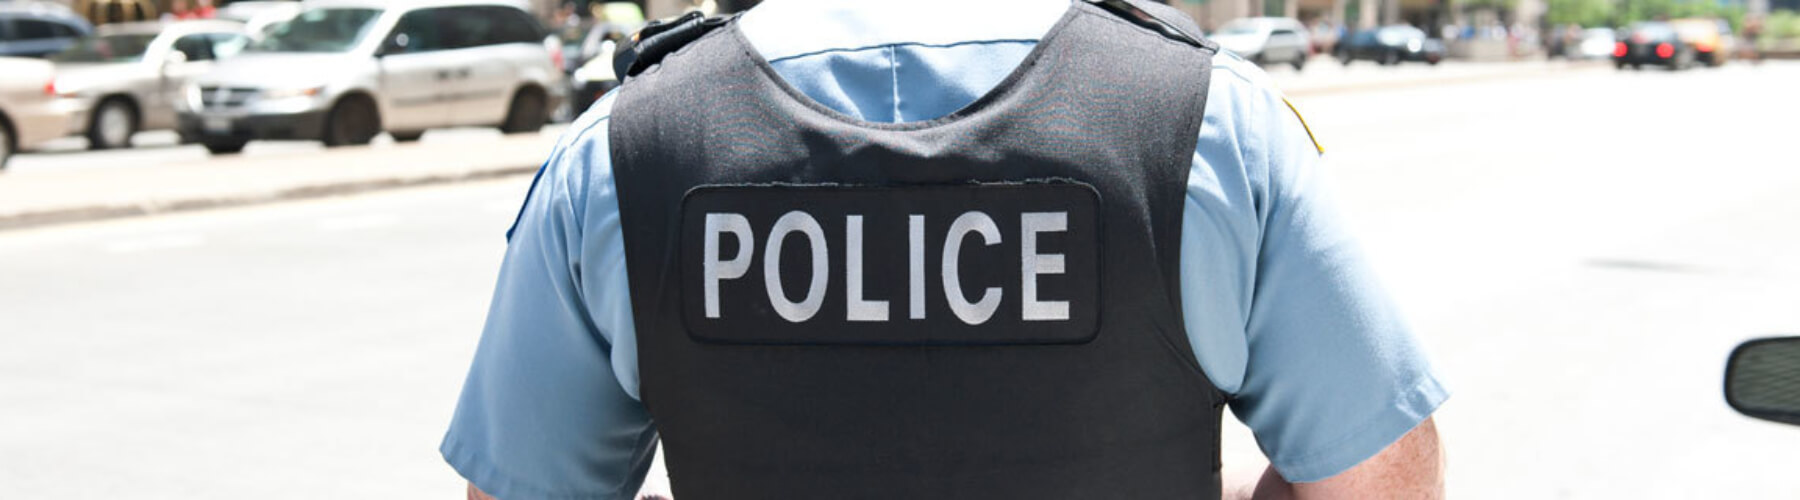 Police wearing bullet proof vest